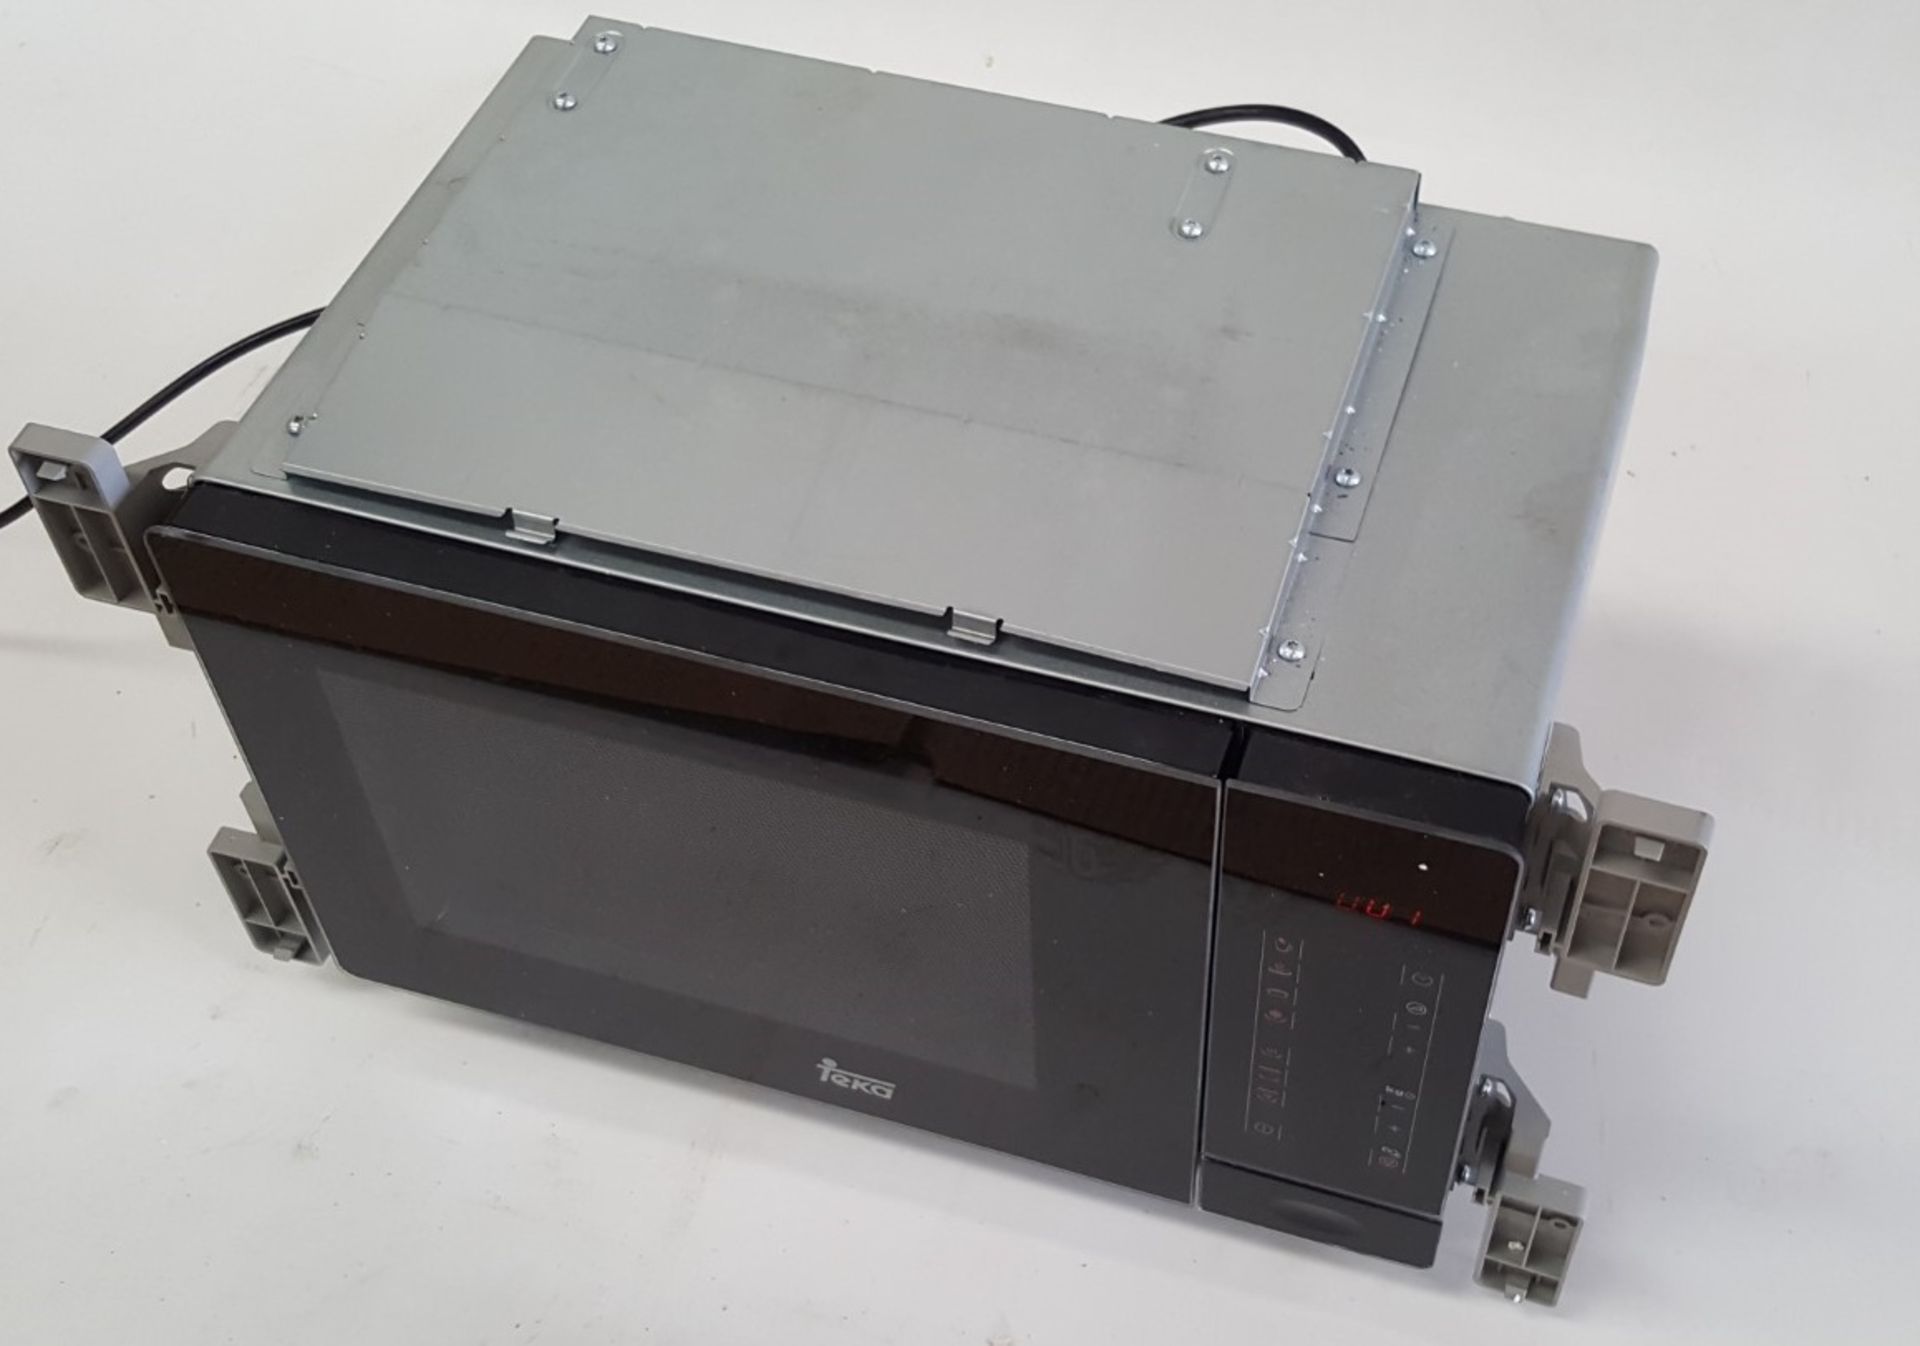 1 x Teka MWL 20 BIT Built-in Microwave (H32/L50/W30CM) - Ref BY158 WF2 - CL011 - Location: Altrincha - Image 4 of 5